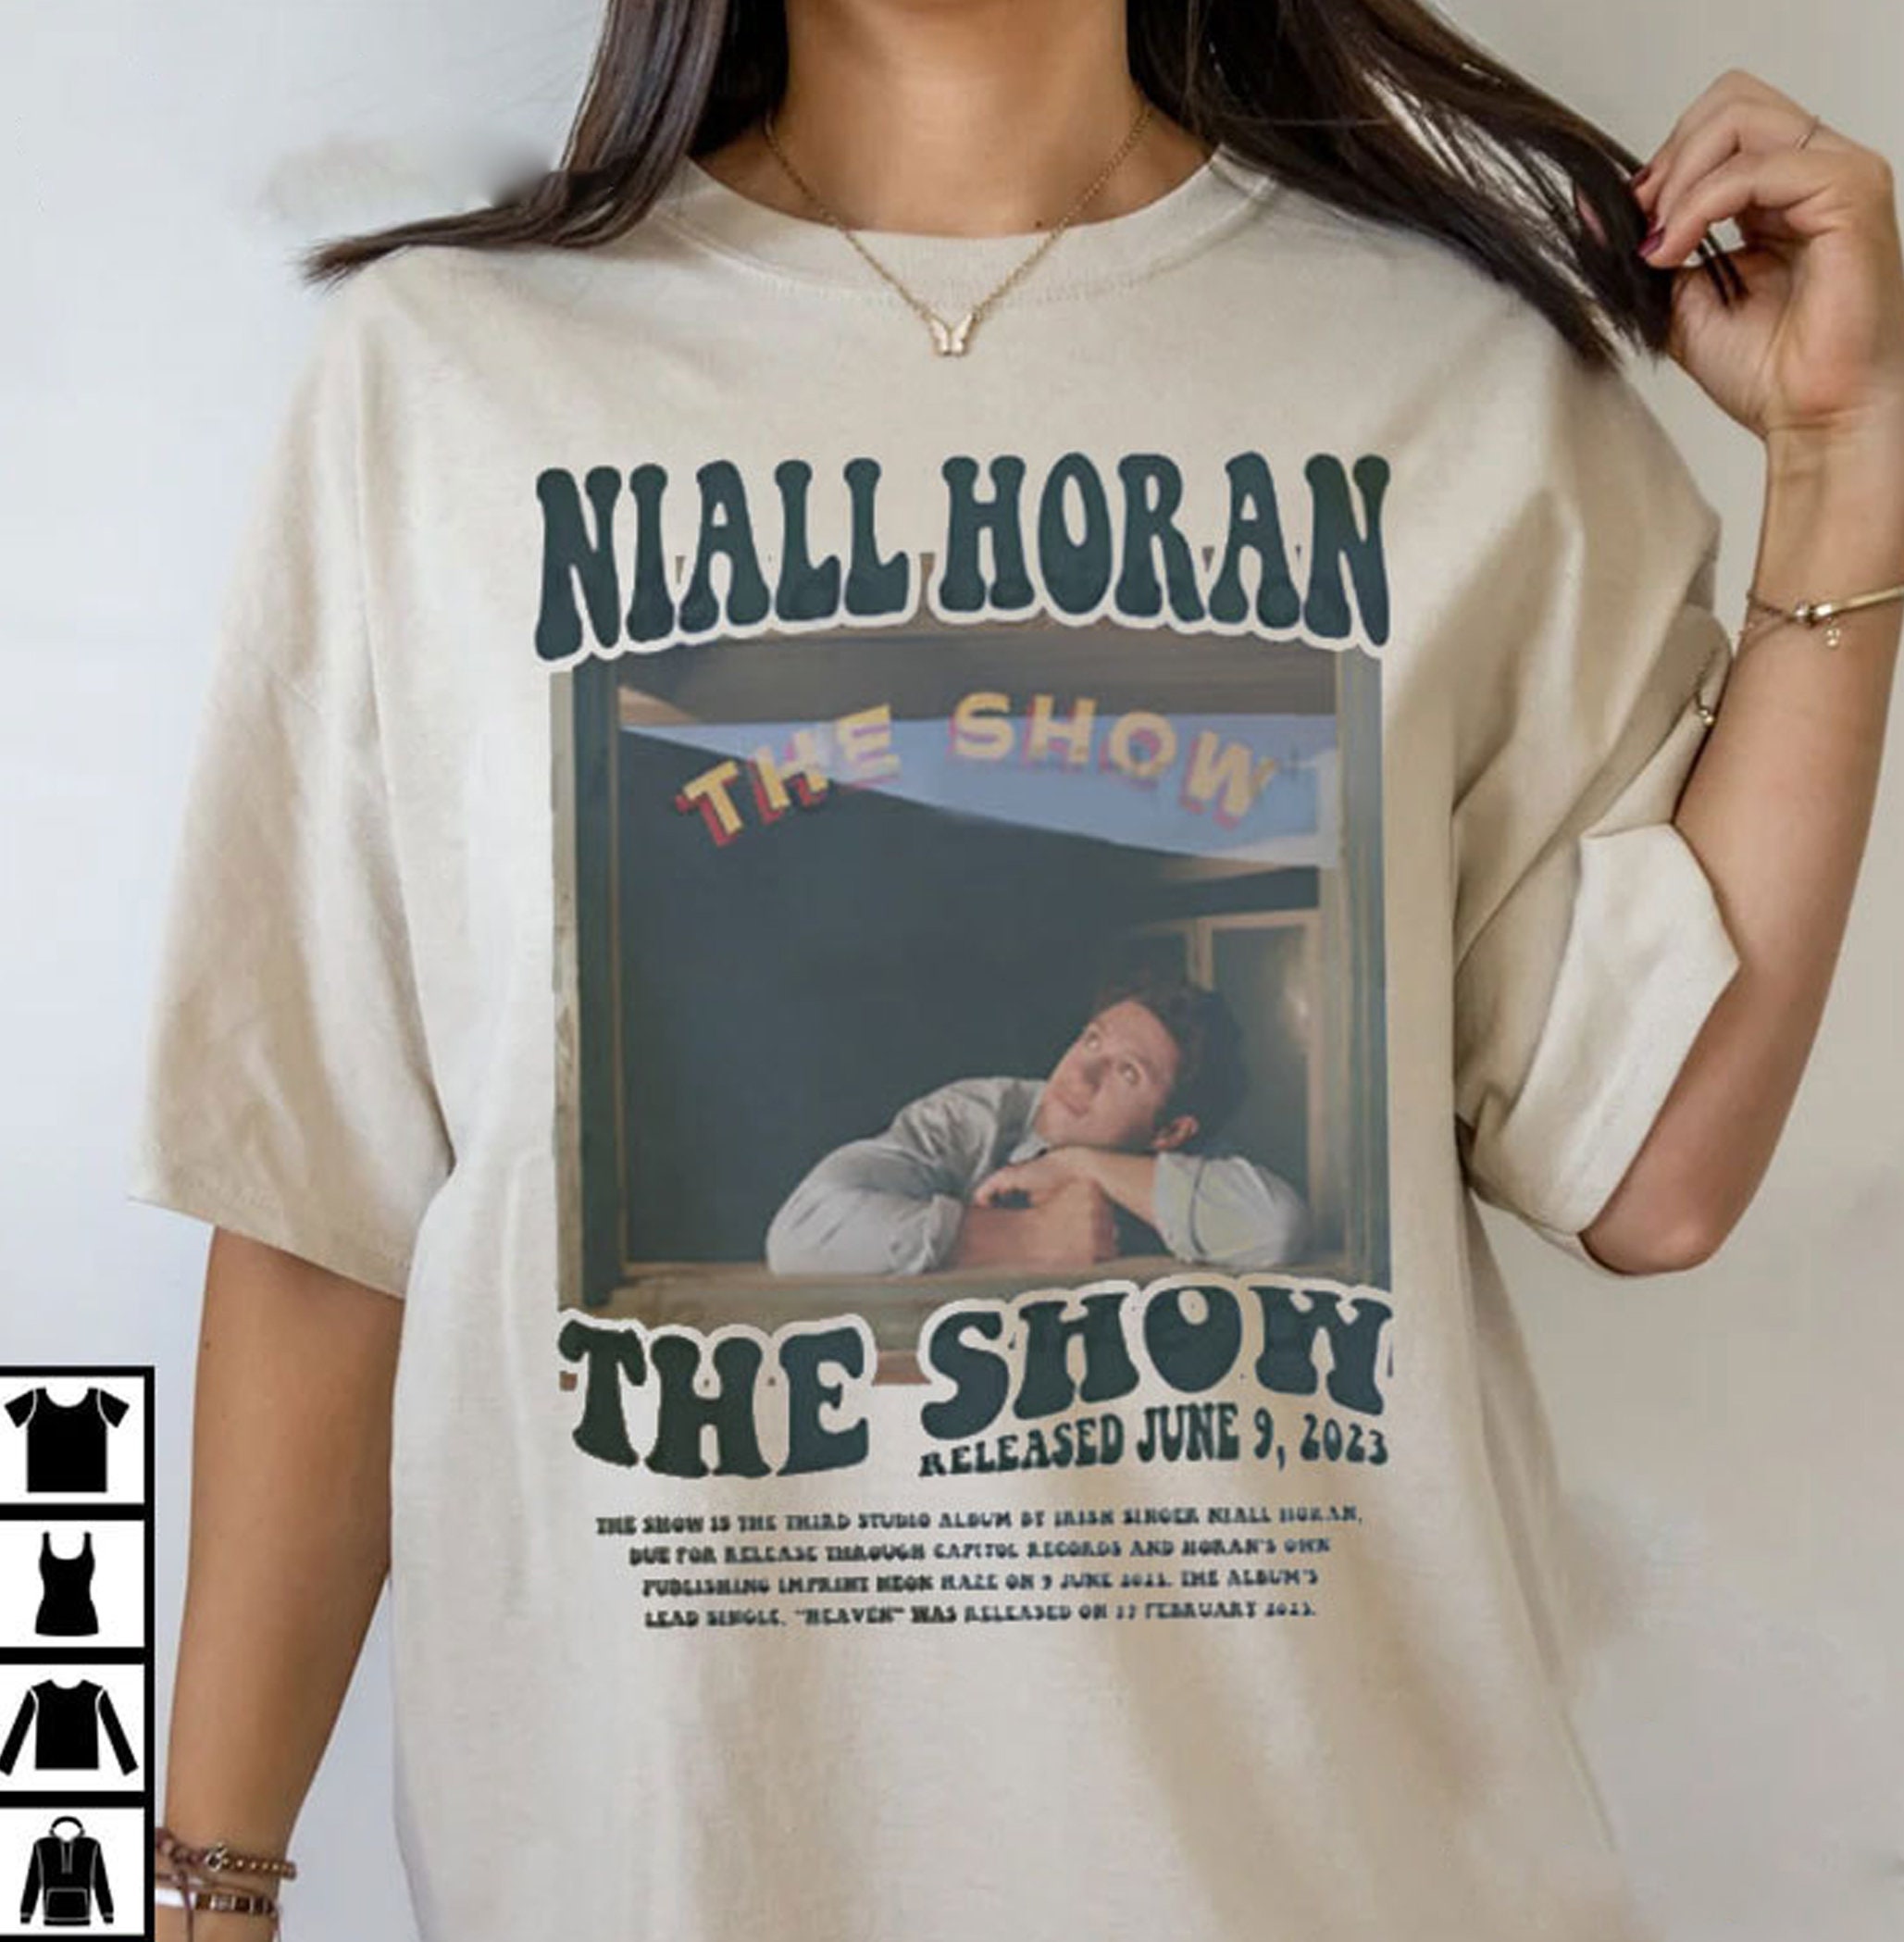 Everywhere Graphic Niall Horan shirt